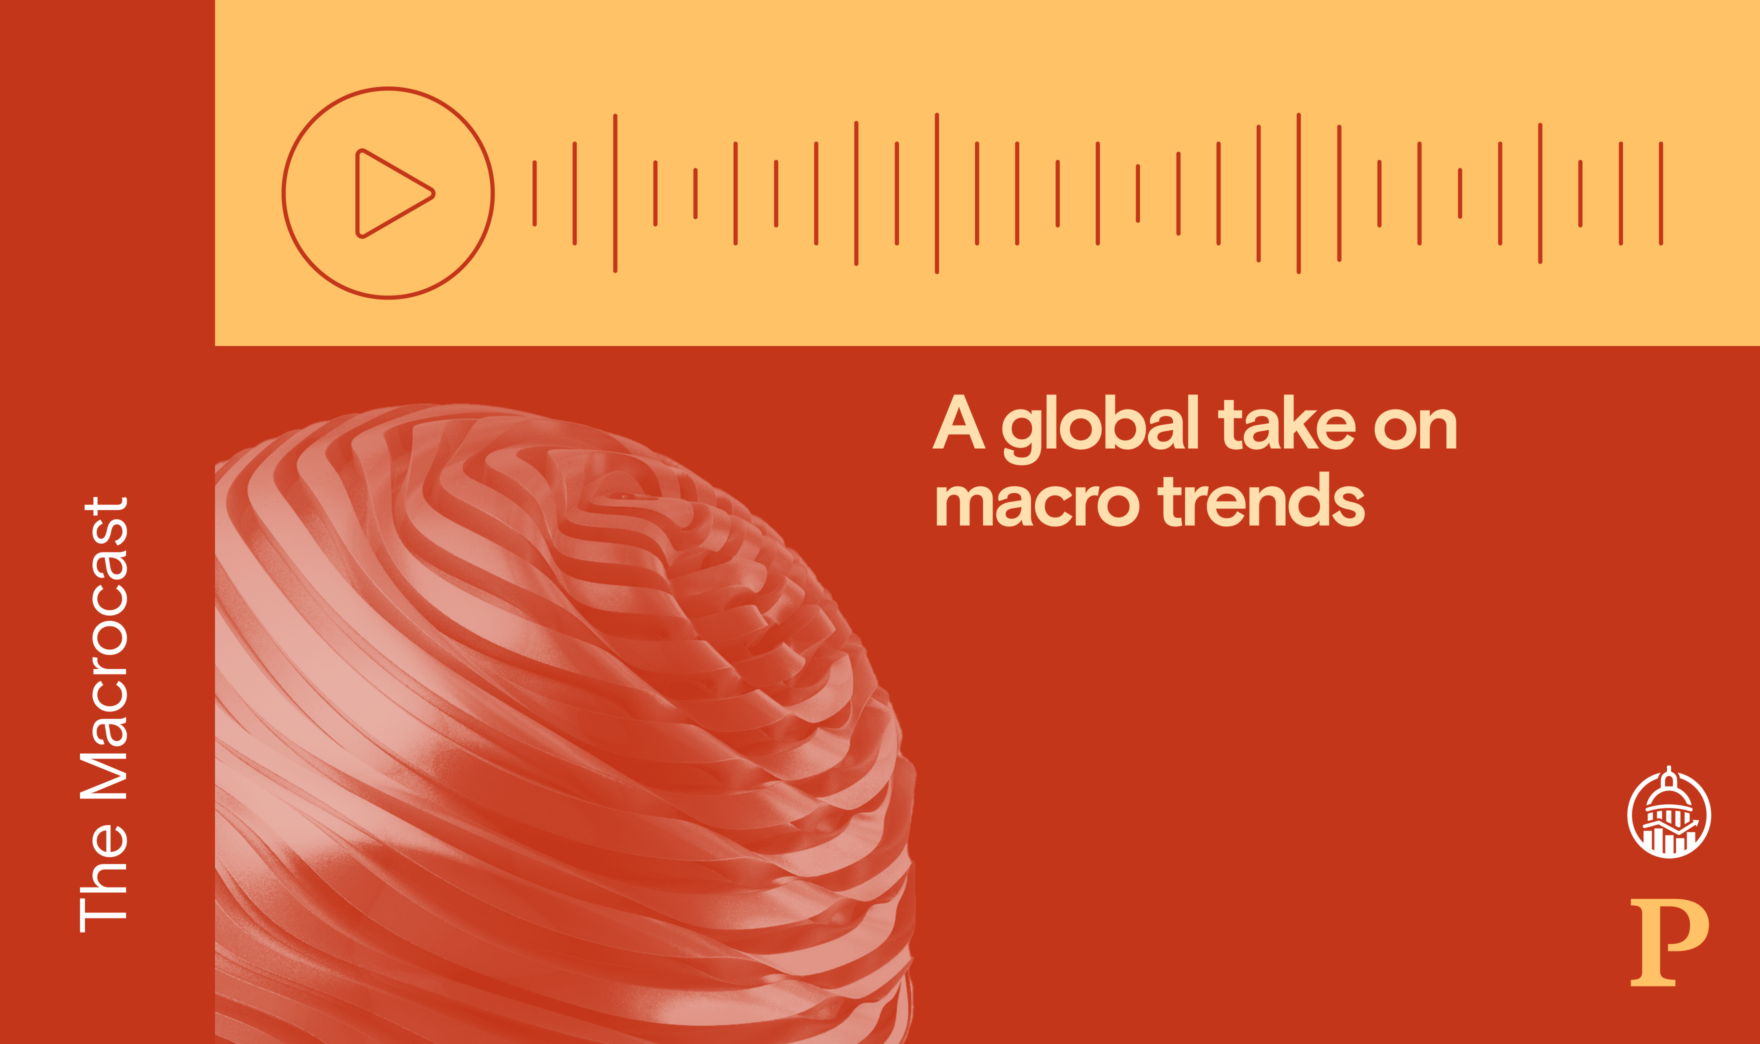 Macrocast: A global take on macro trends